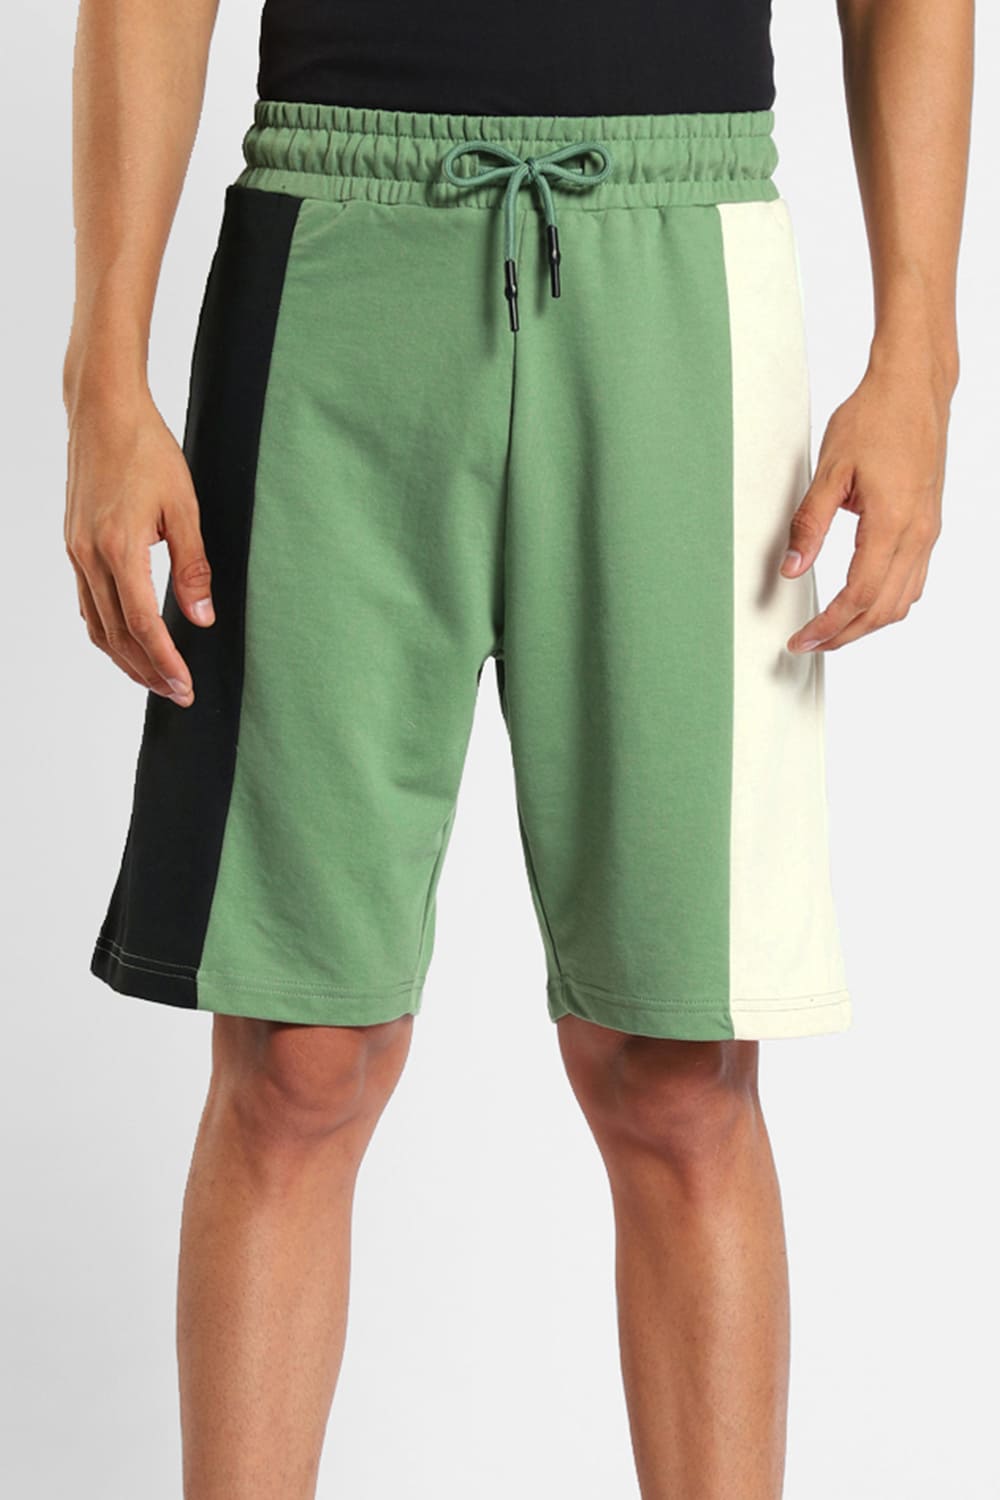 Green Colorblocked Shorts